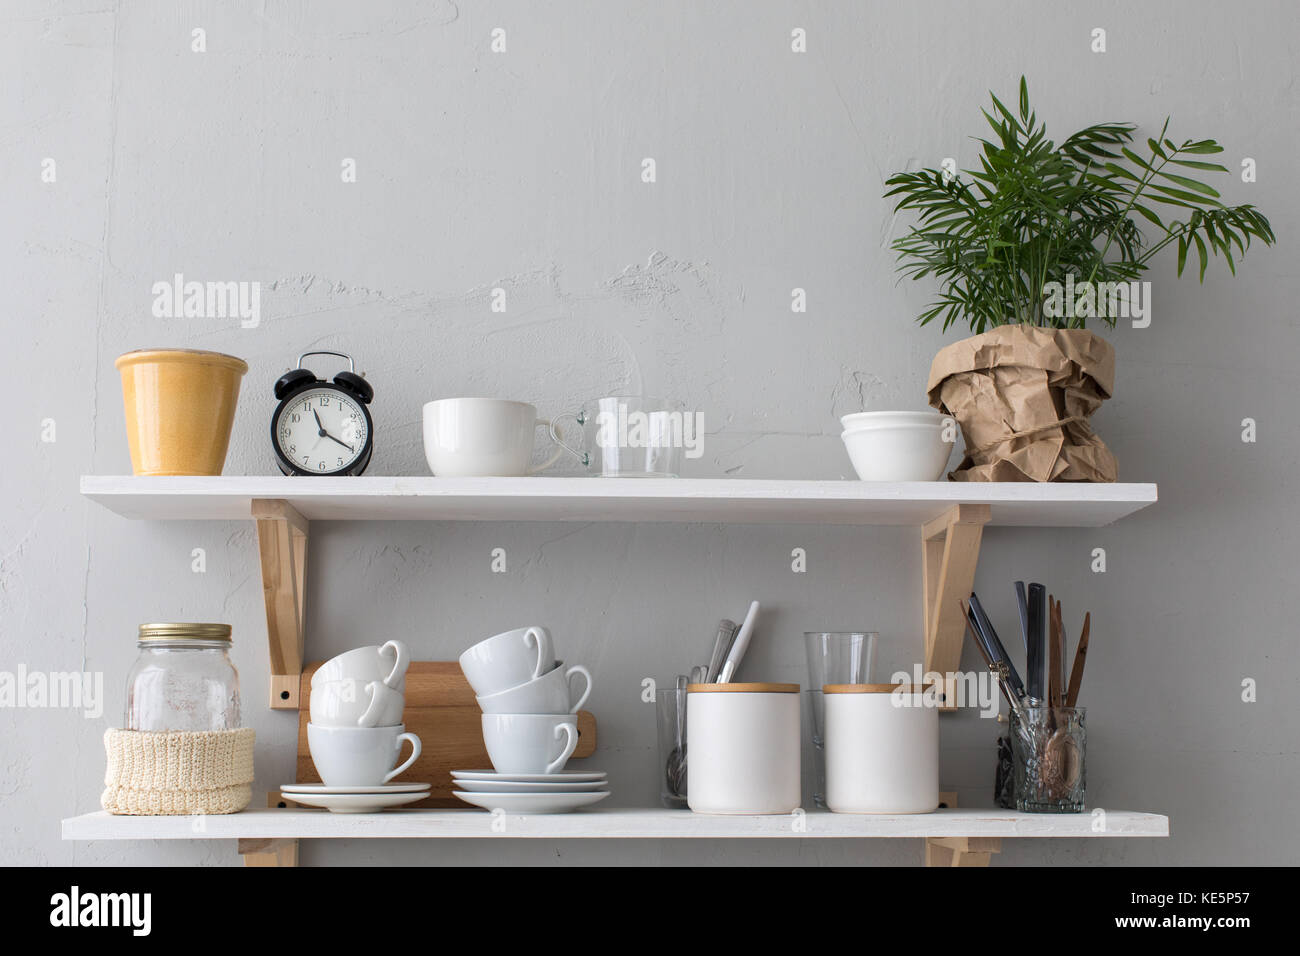 Utensils and mugs on shelf gray wall Stock Photo